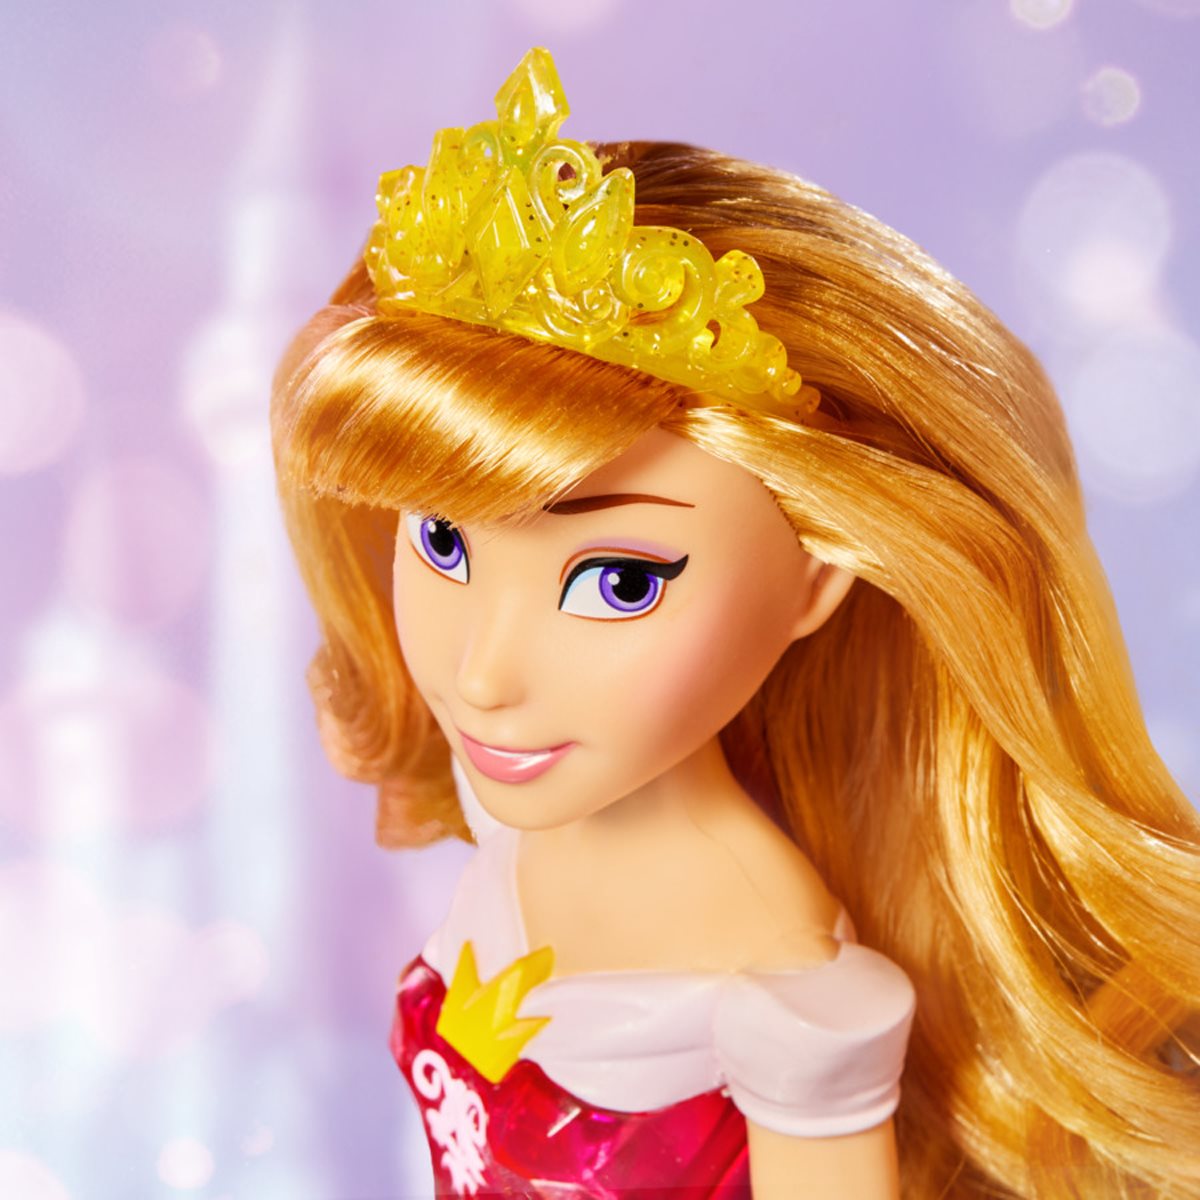 Details about   Disney Princess Royal Shimmer Aurora Doll 